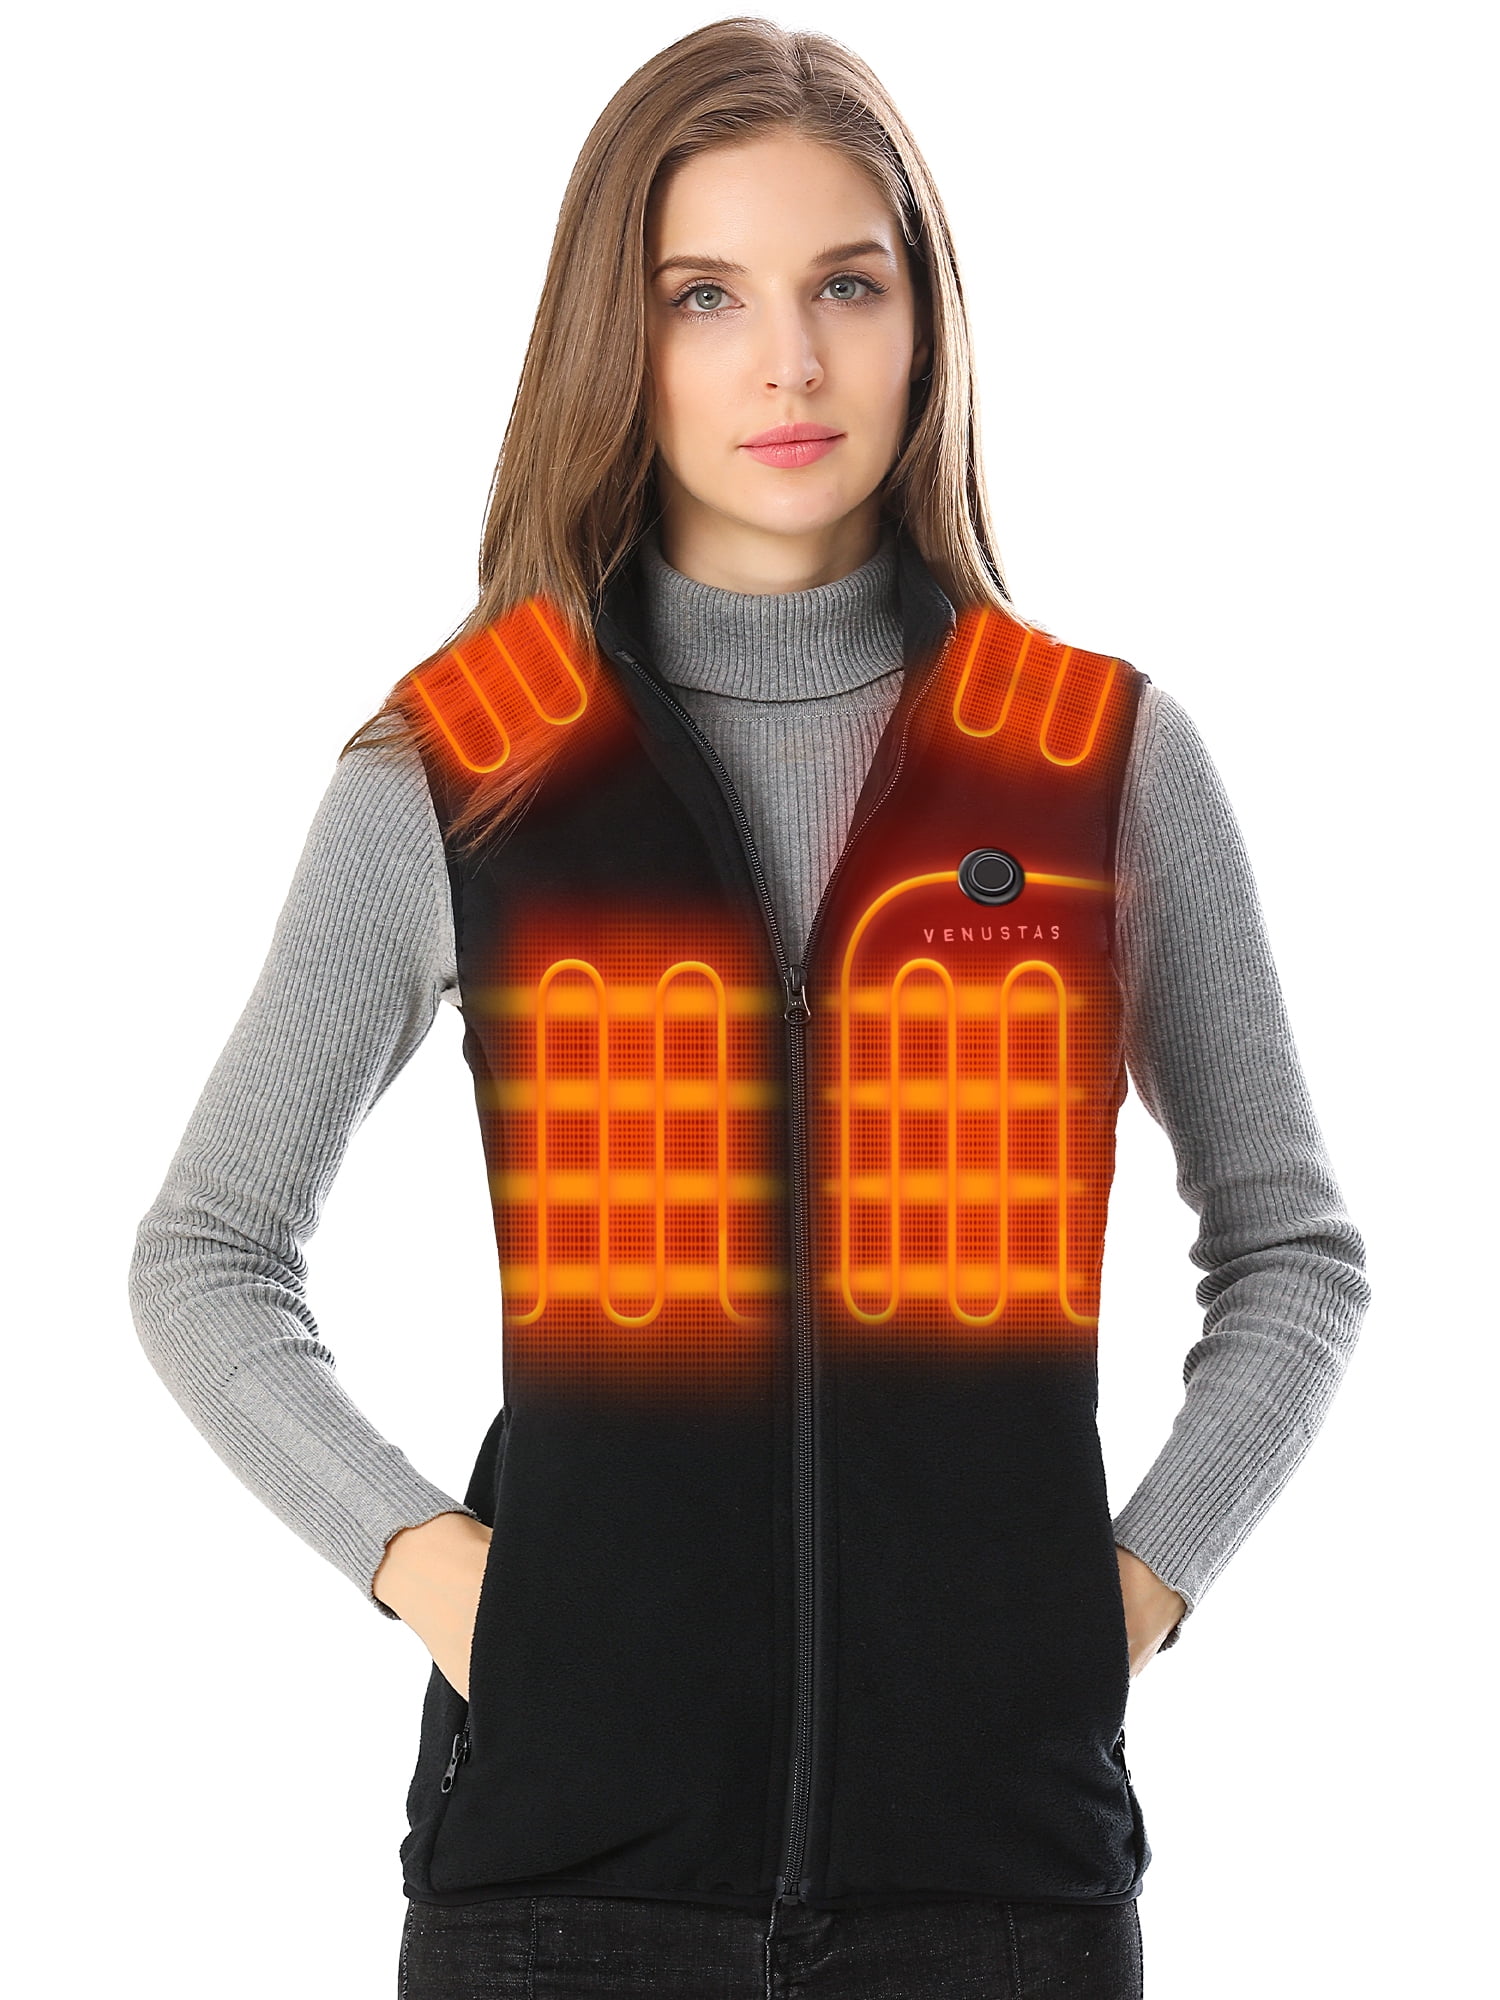 Venustas Women's Fleece Heated Vest with Battery Pack 7.4V, Lightweight ...